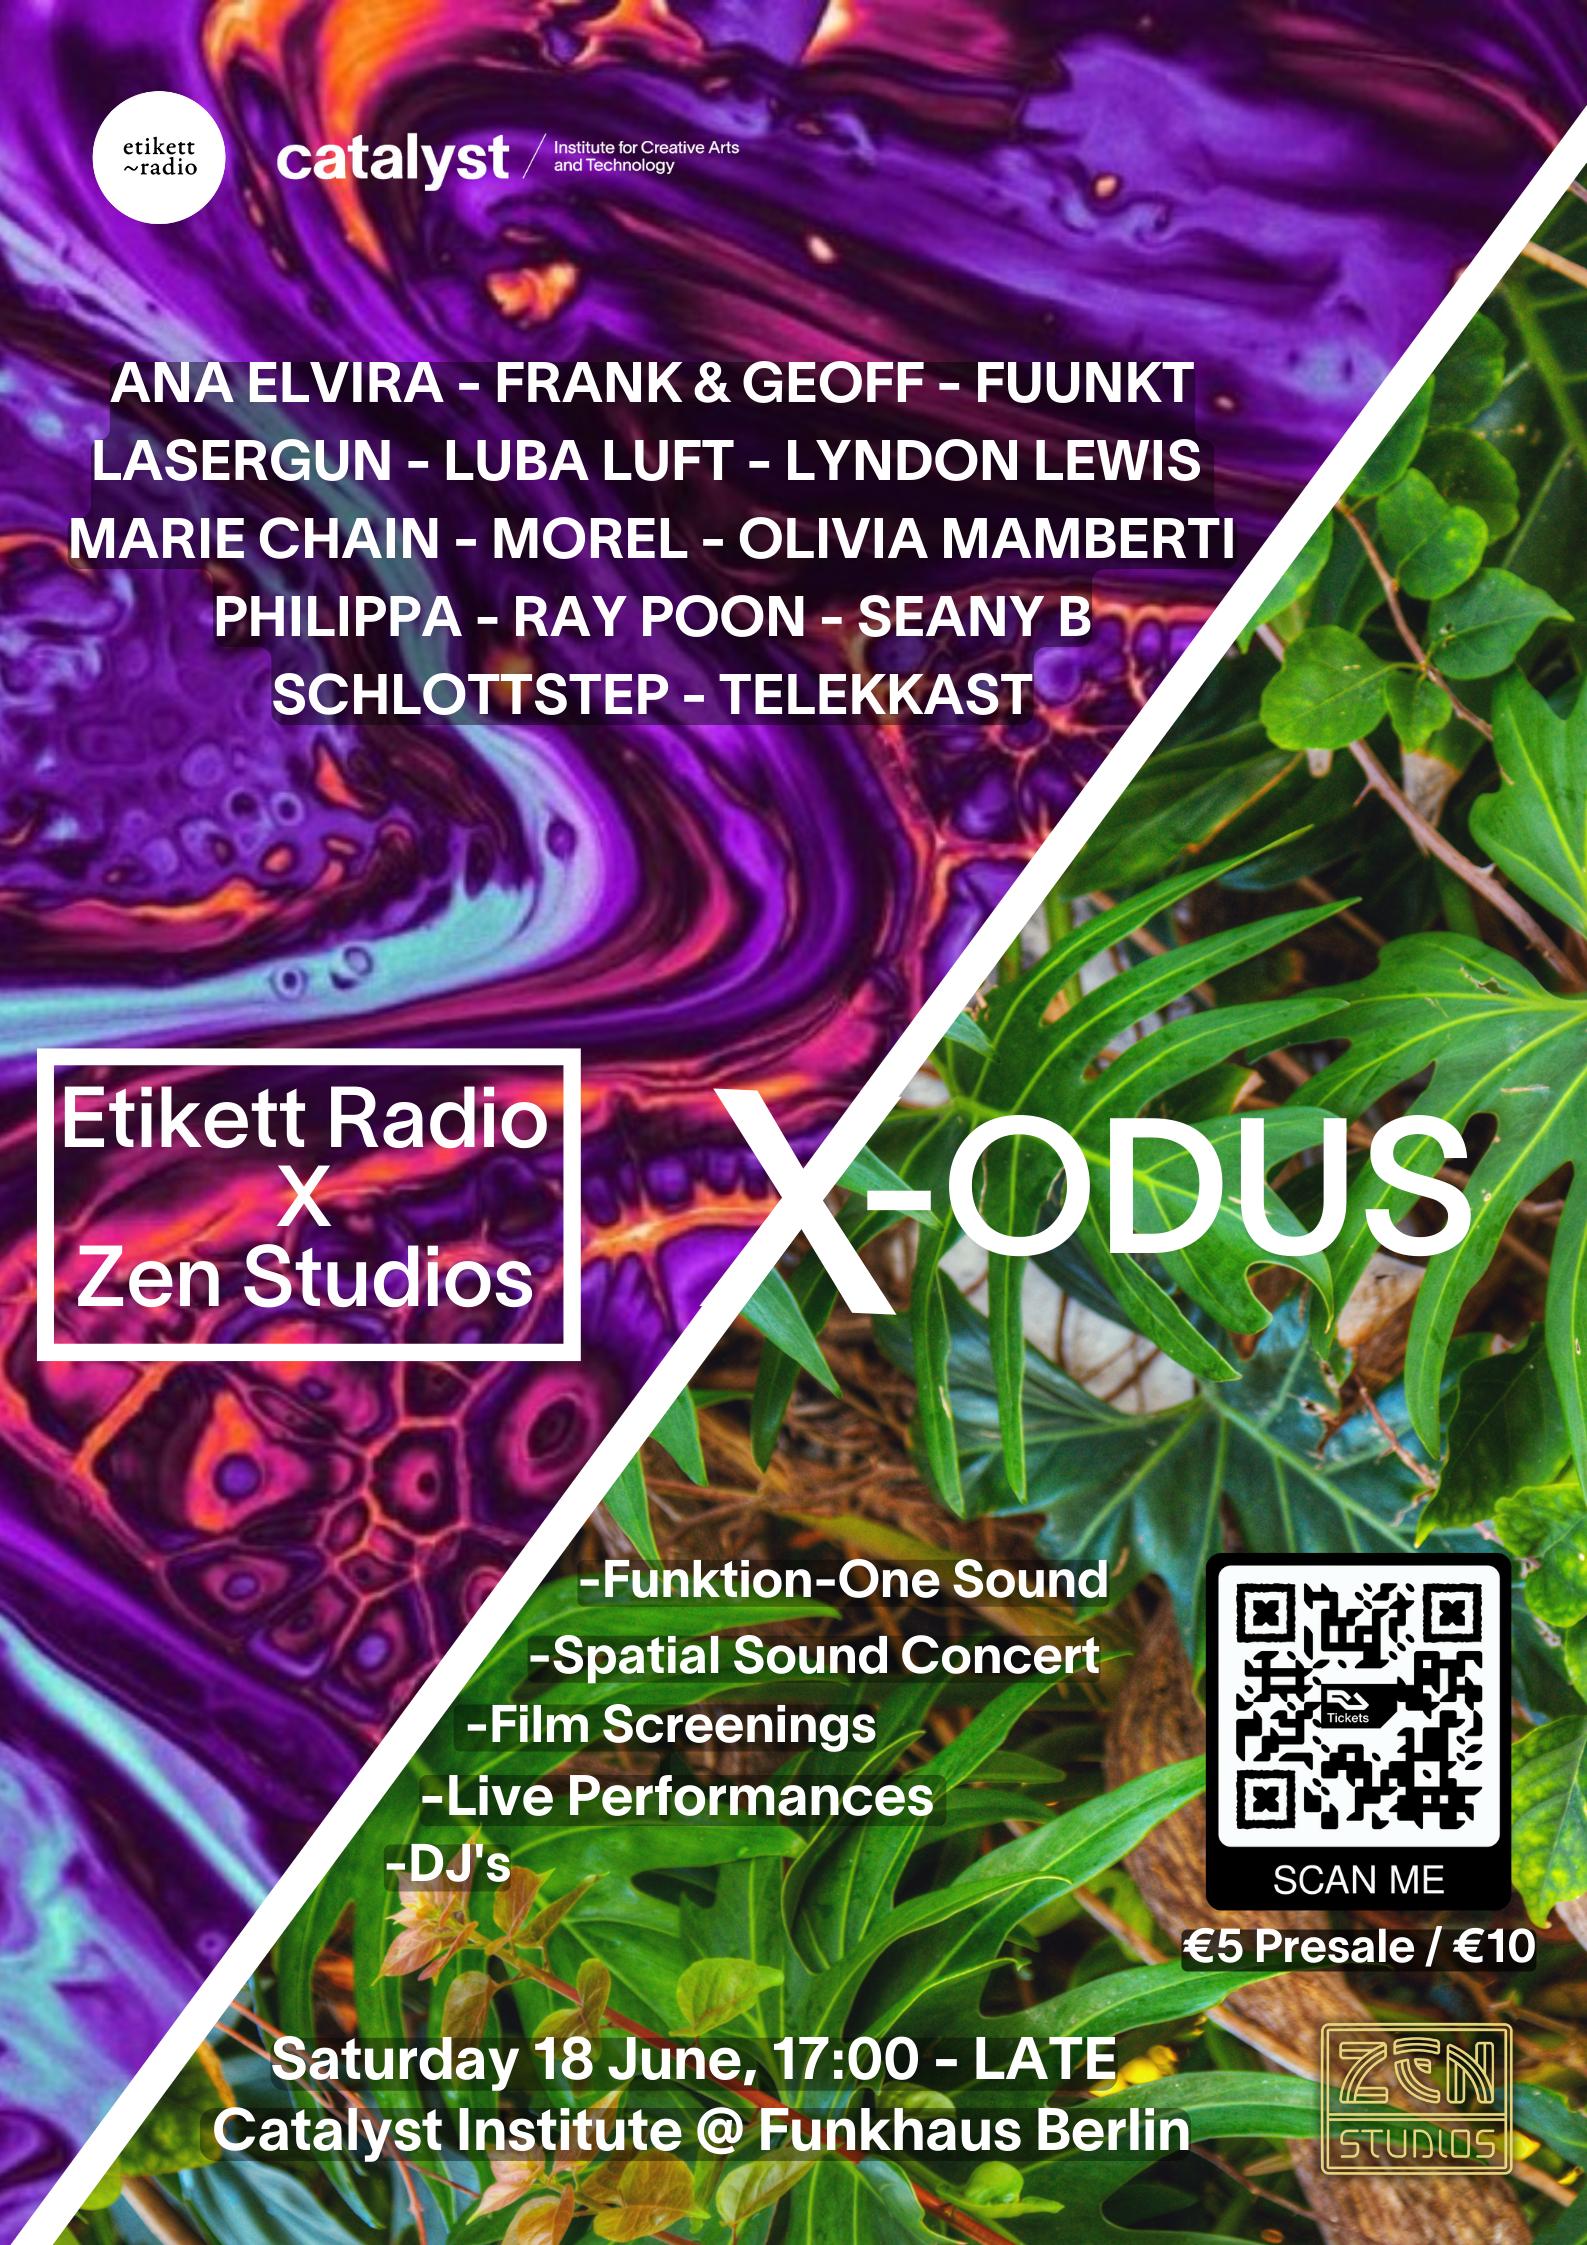 Etikett Radio & Zen Studios present: X-Odus - フライヤー表